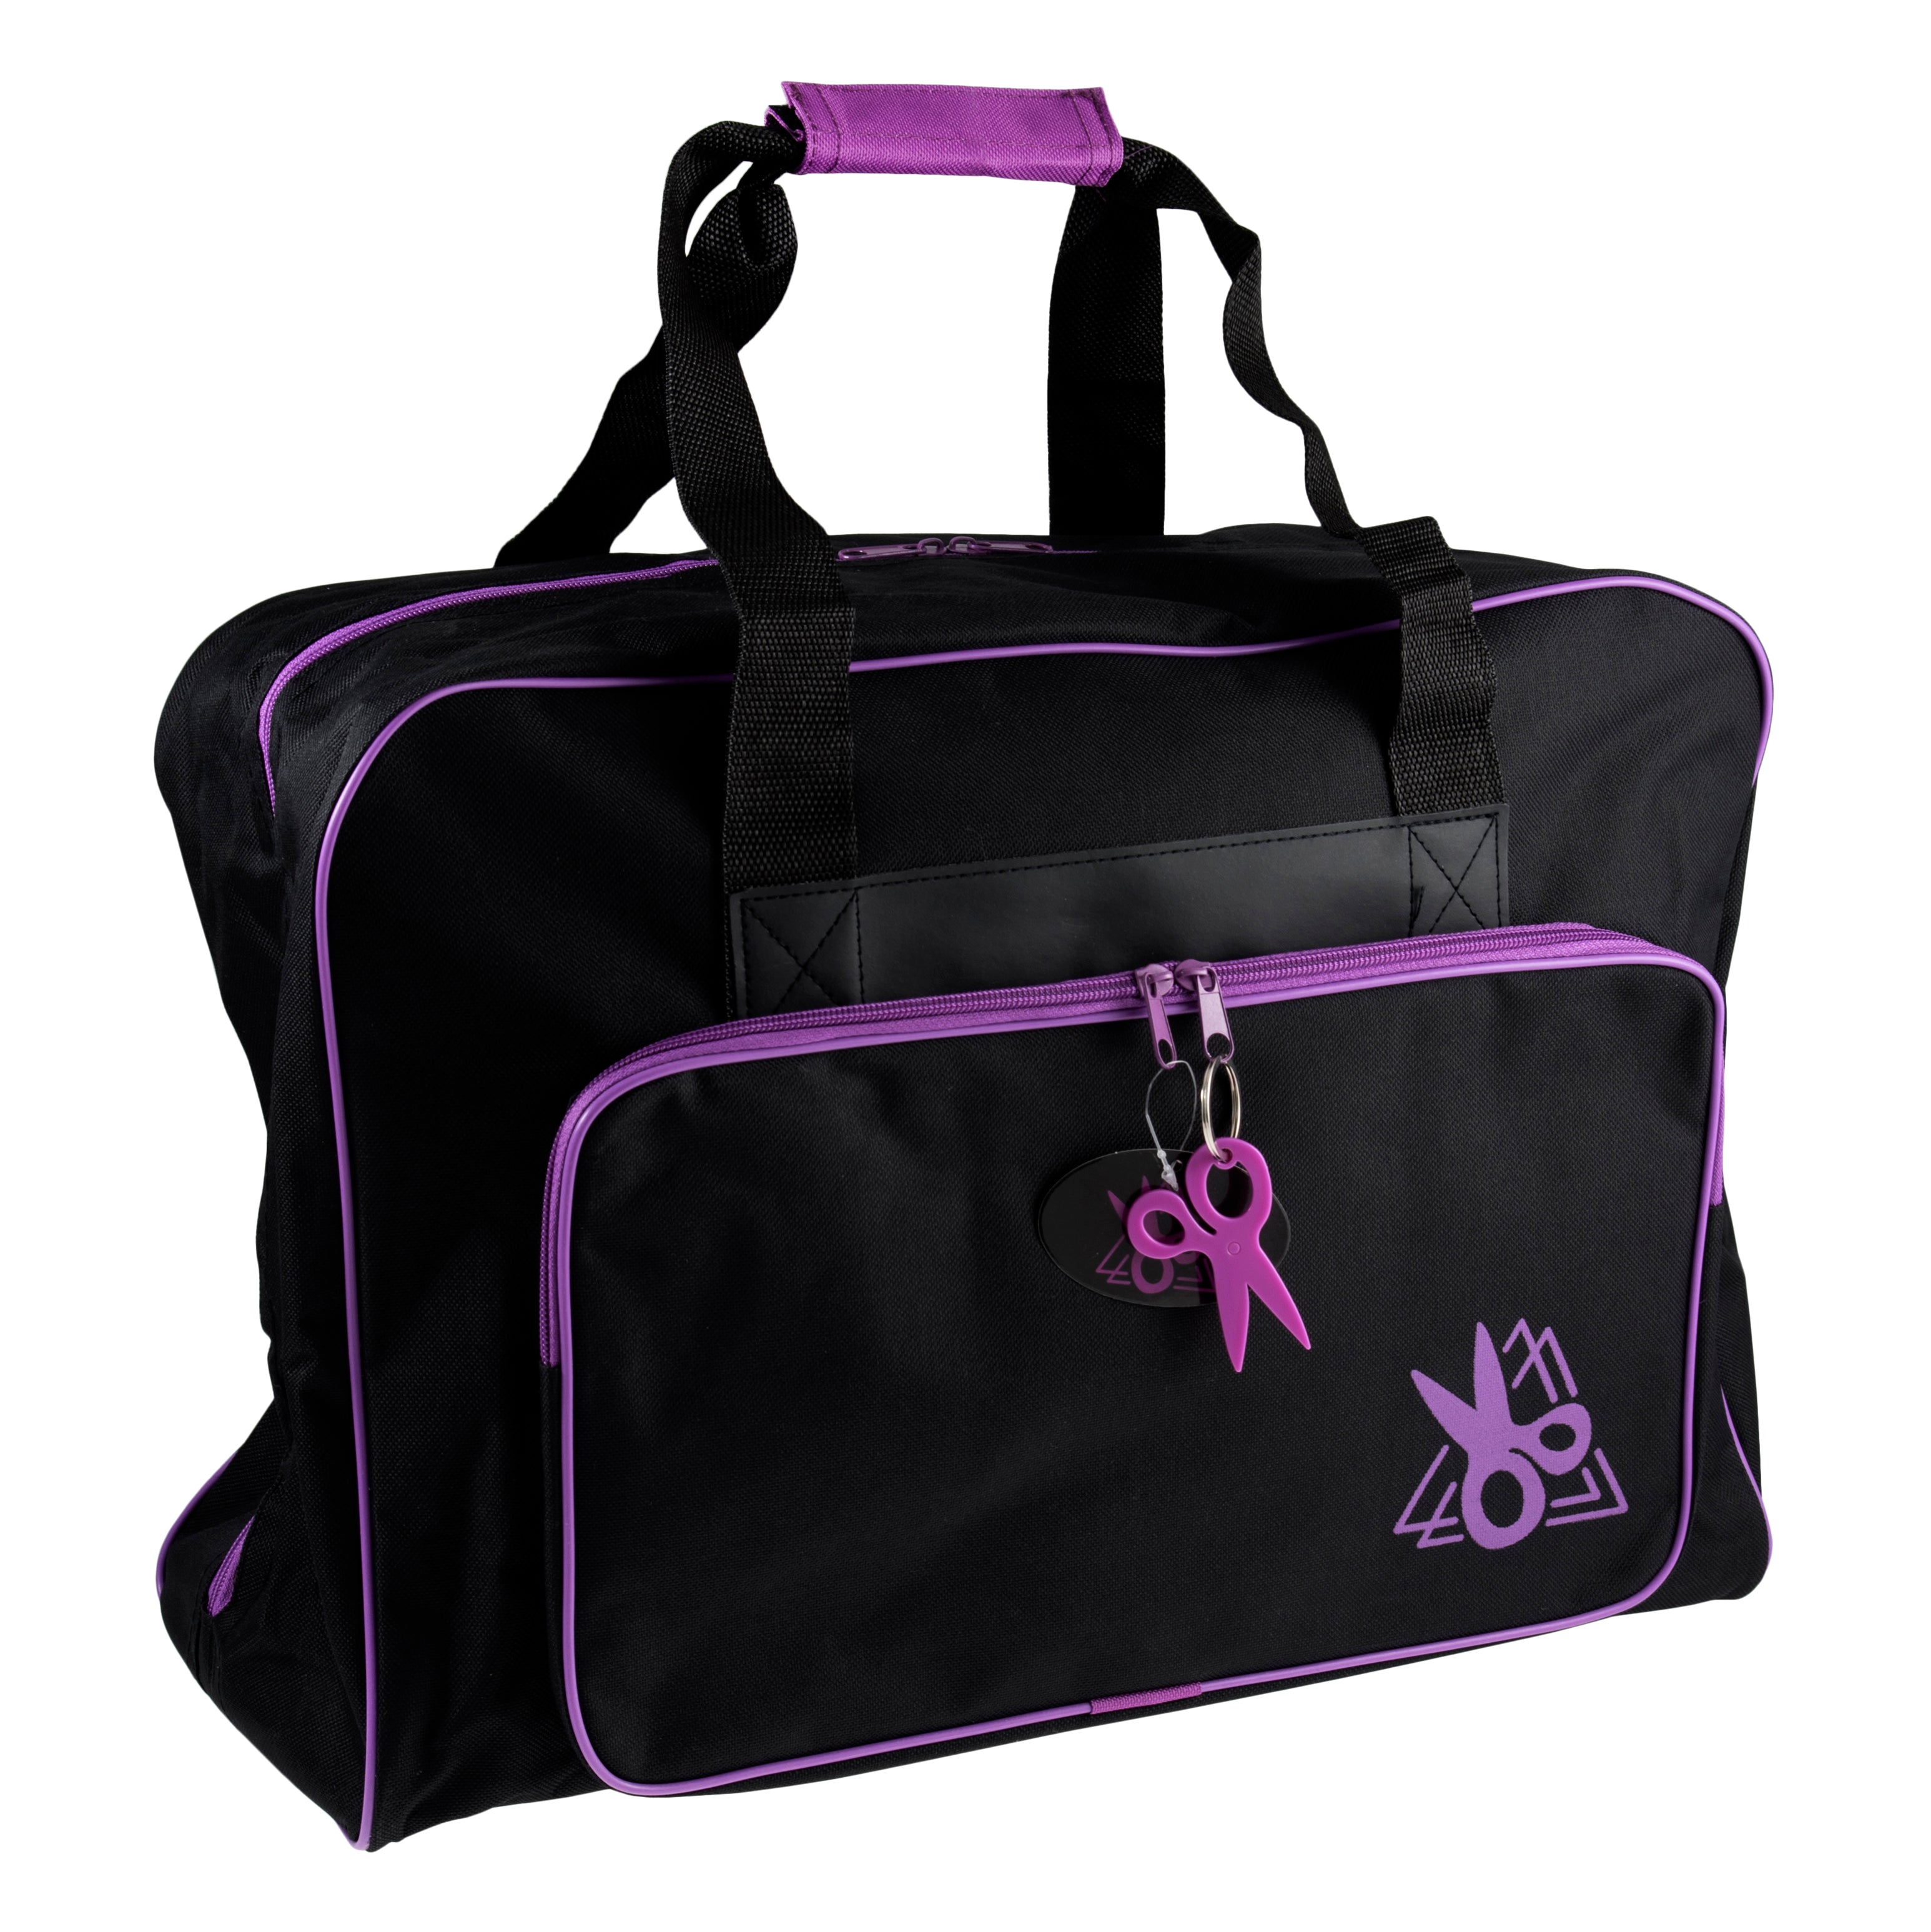 Sewing Machine Bag, Black and Purple